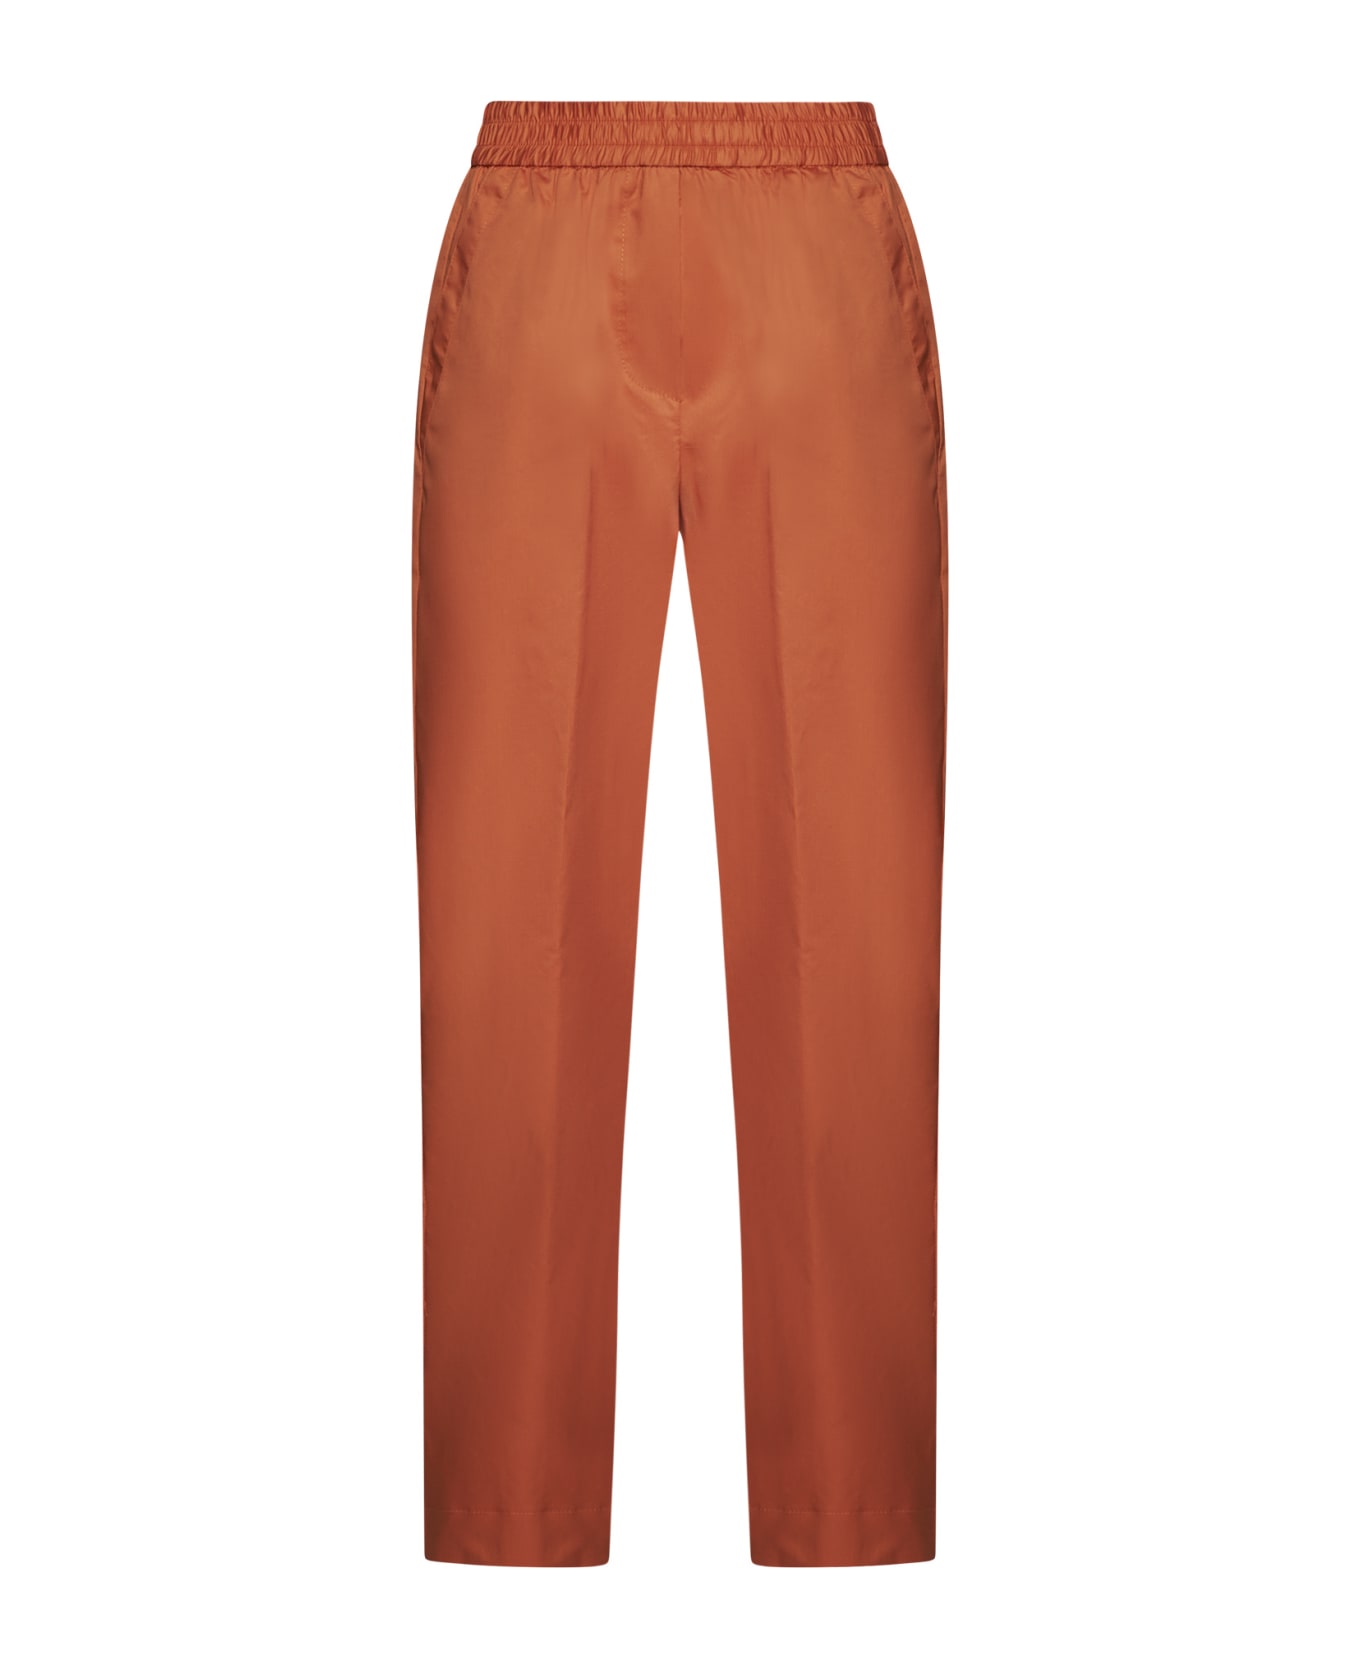 Kaos Pants - Orange